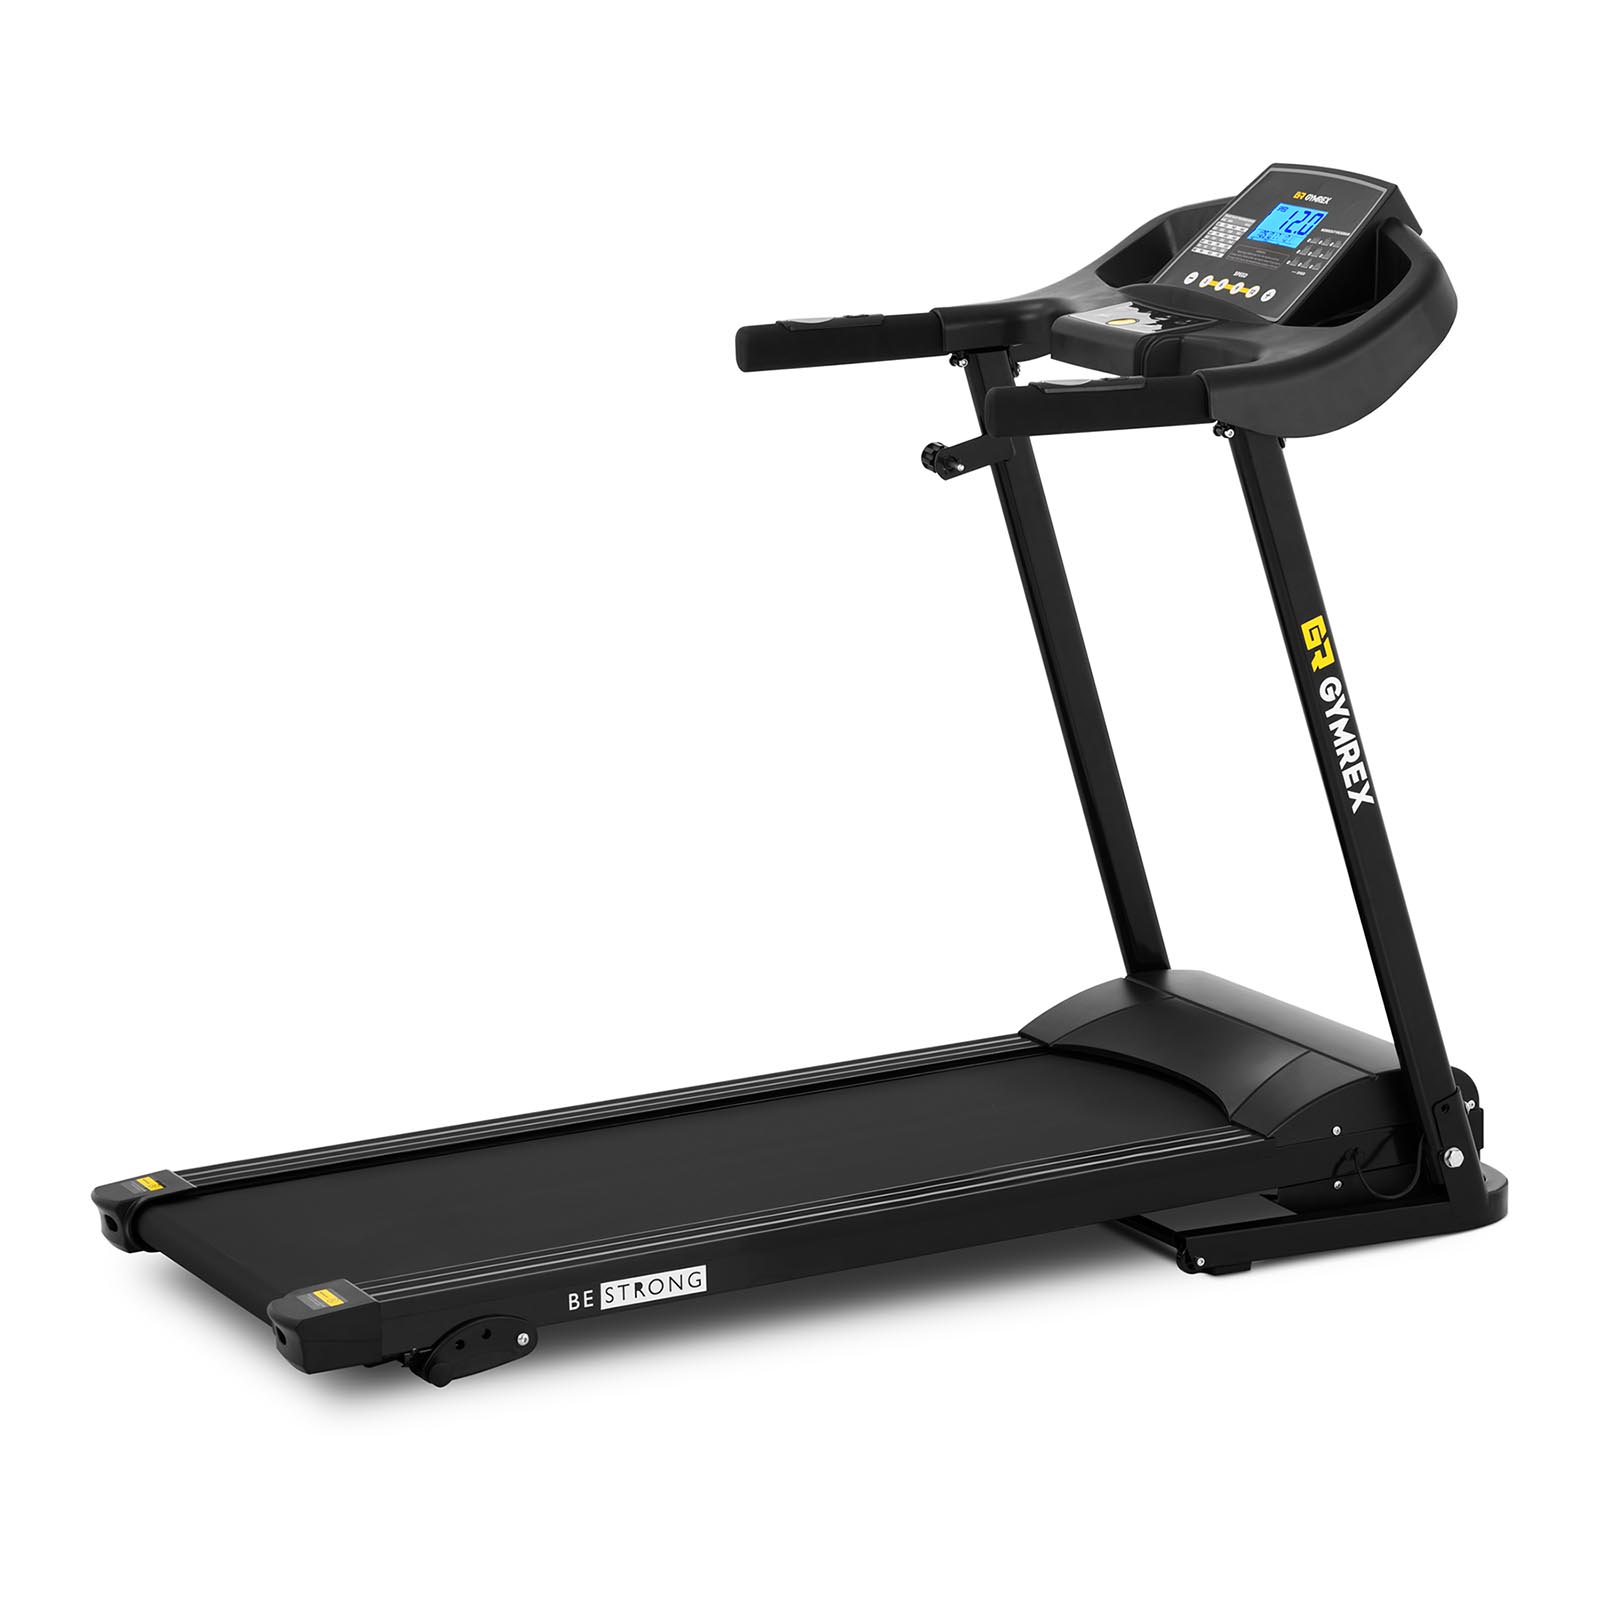 Treadmill - folding - 1,200 W - 1 to 12 km/h - 120 kg - 3 incline levels